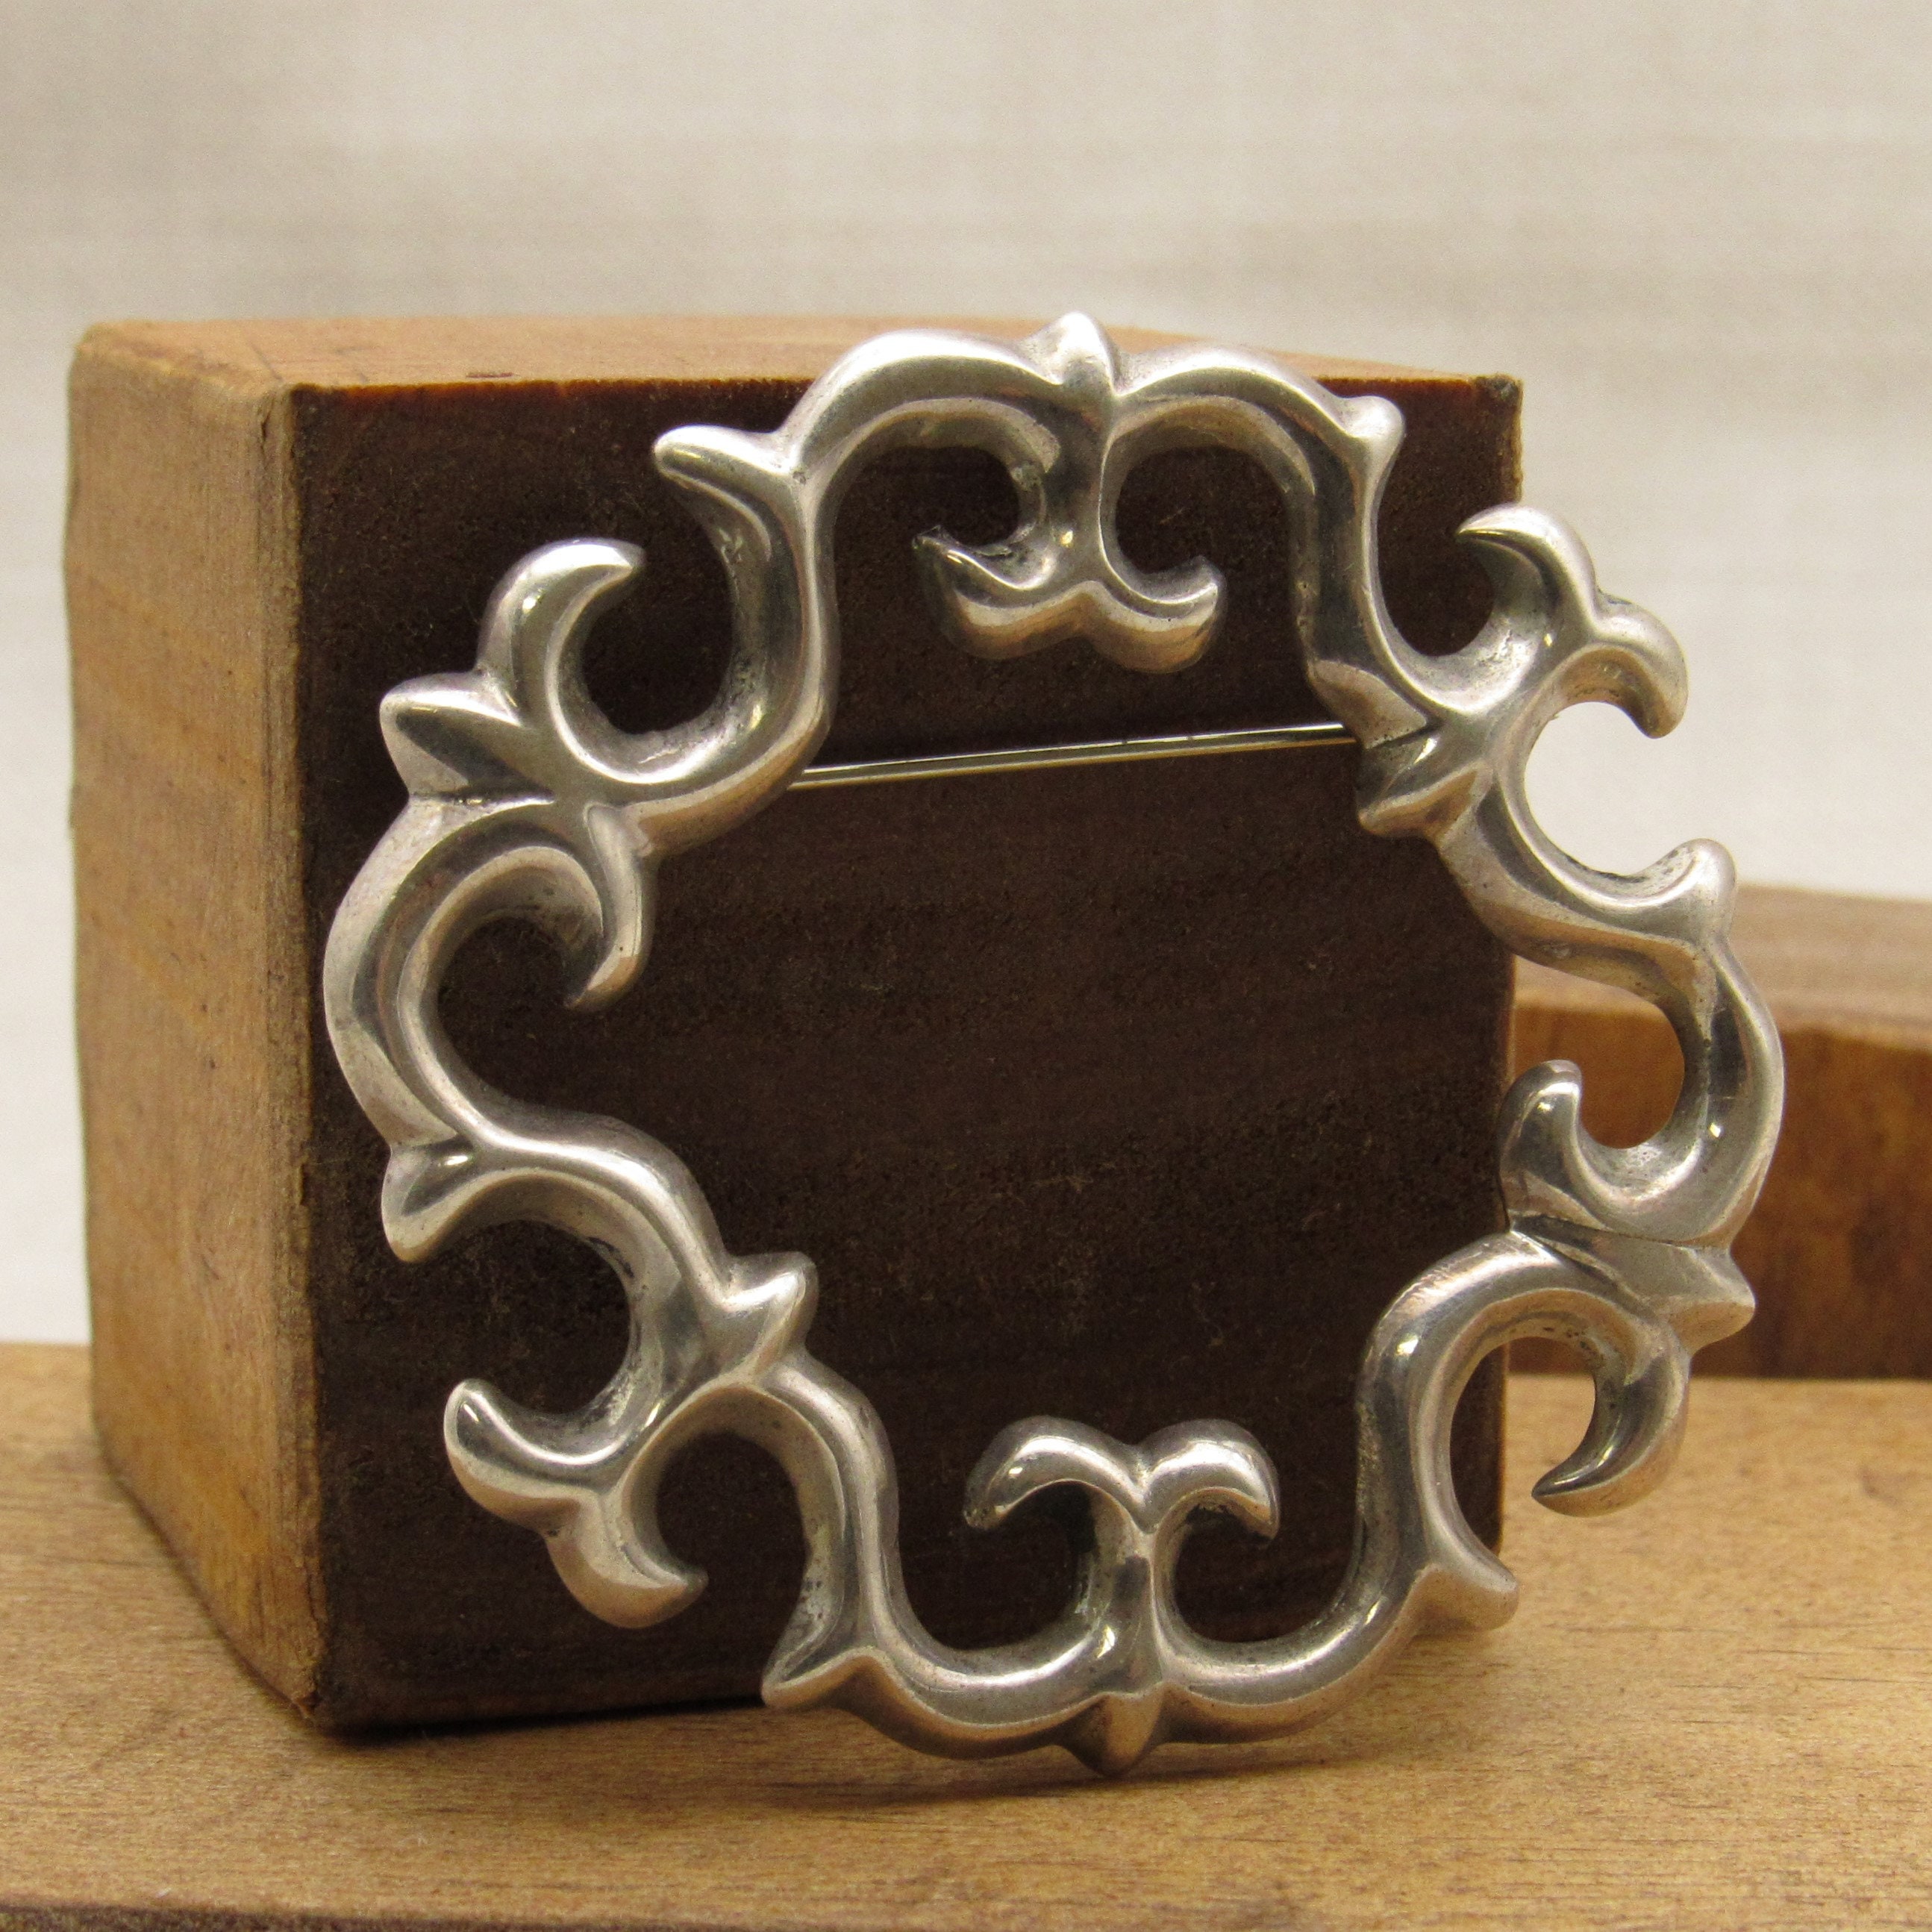 Quick Cast Sand Casting Basic Kit Metal Jewelry Making Petrobond Tool Set - KIT-0053, Women's, Brown